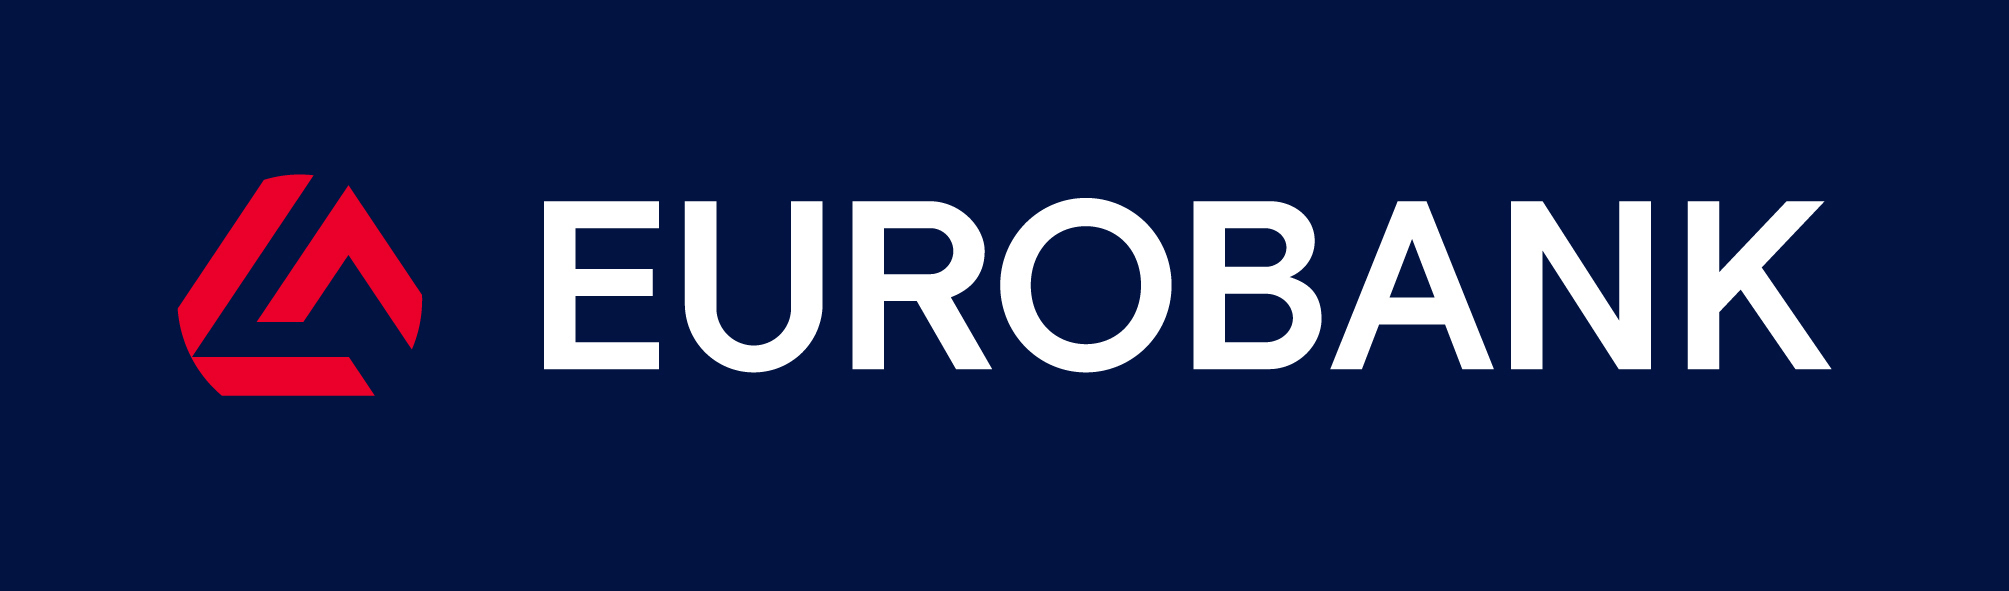 Eurobank: Αγόρασε επιπλέον 168 μετοχές της Ελληνικής Τράπεζας